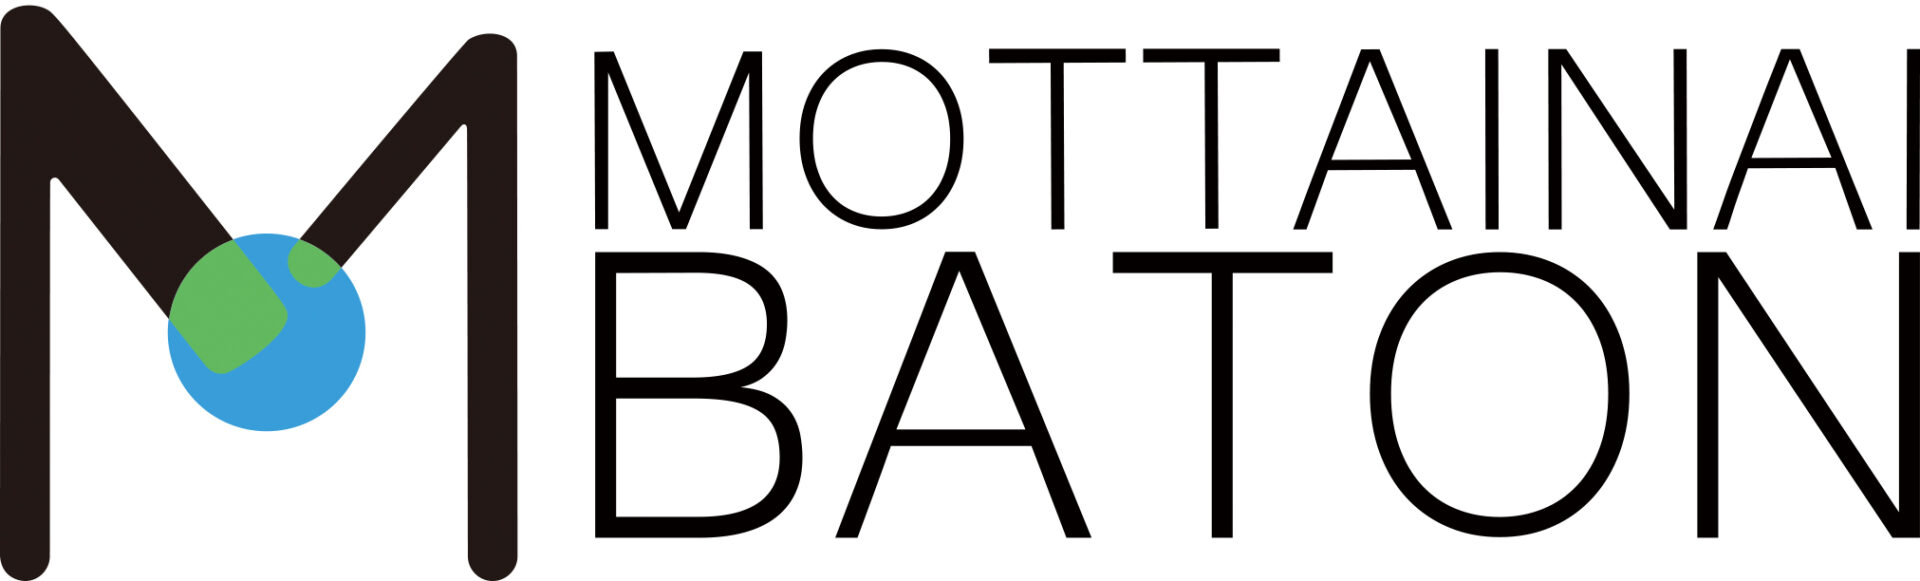 MOTTAINAI BATON株式会社